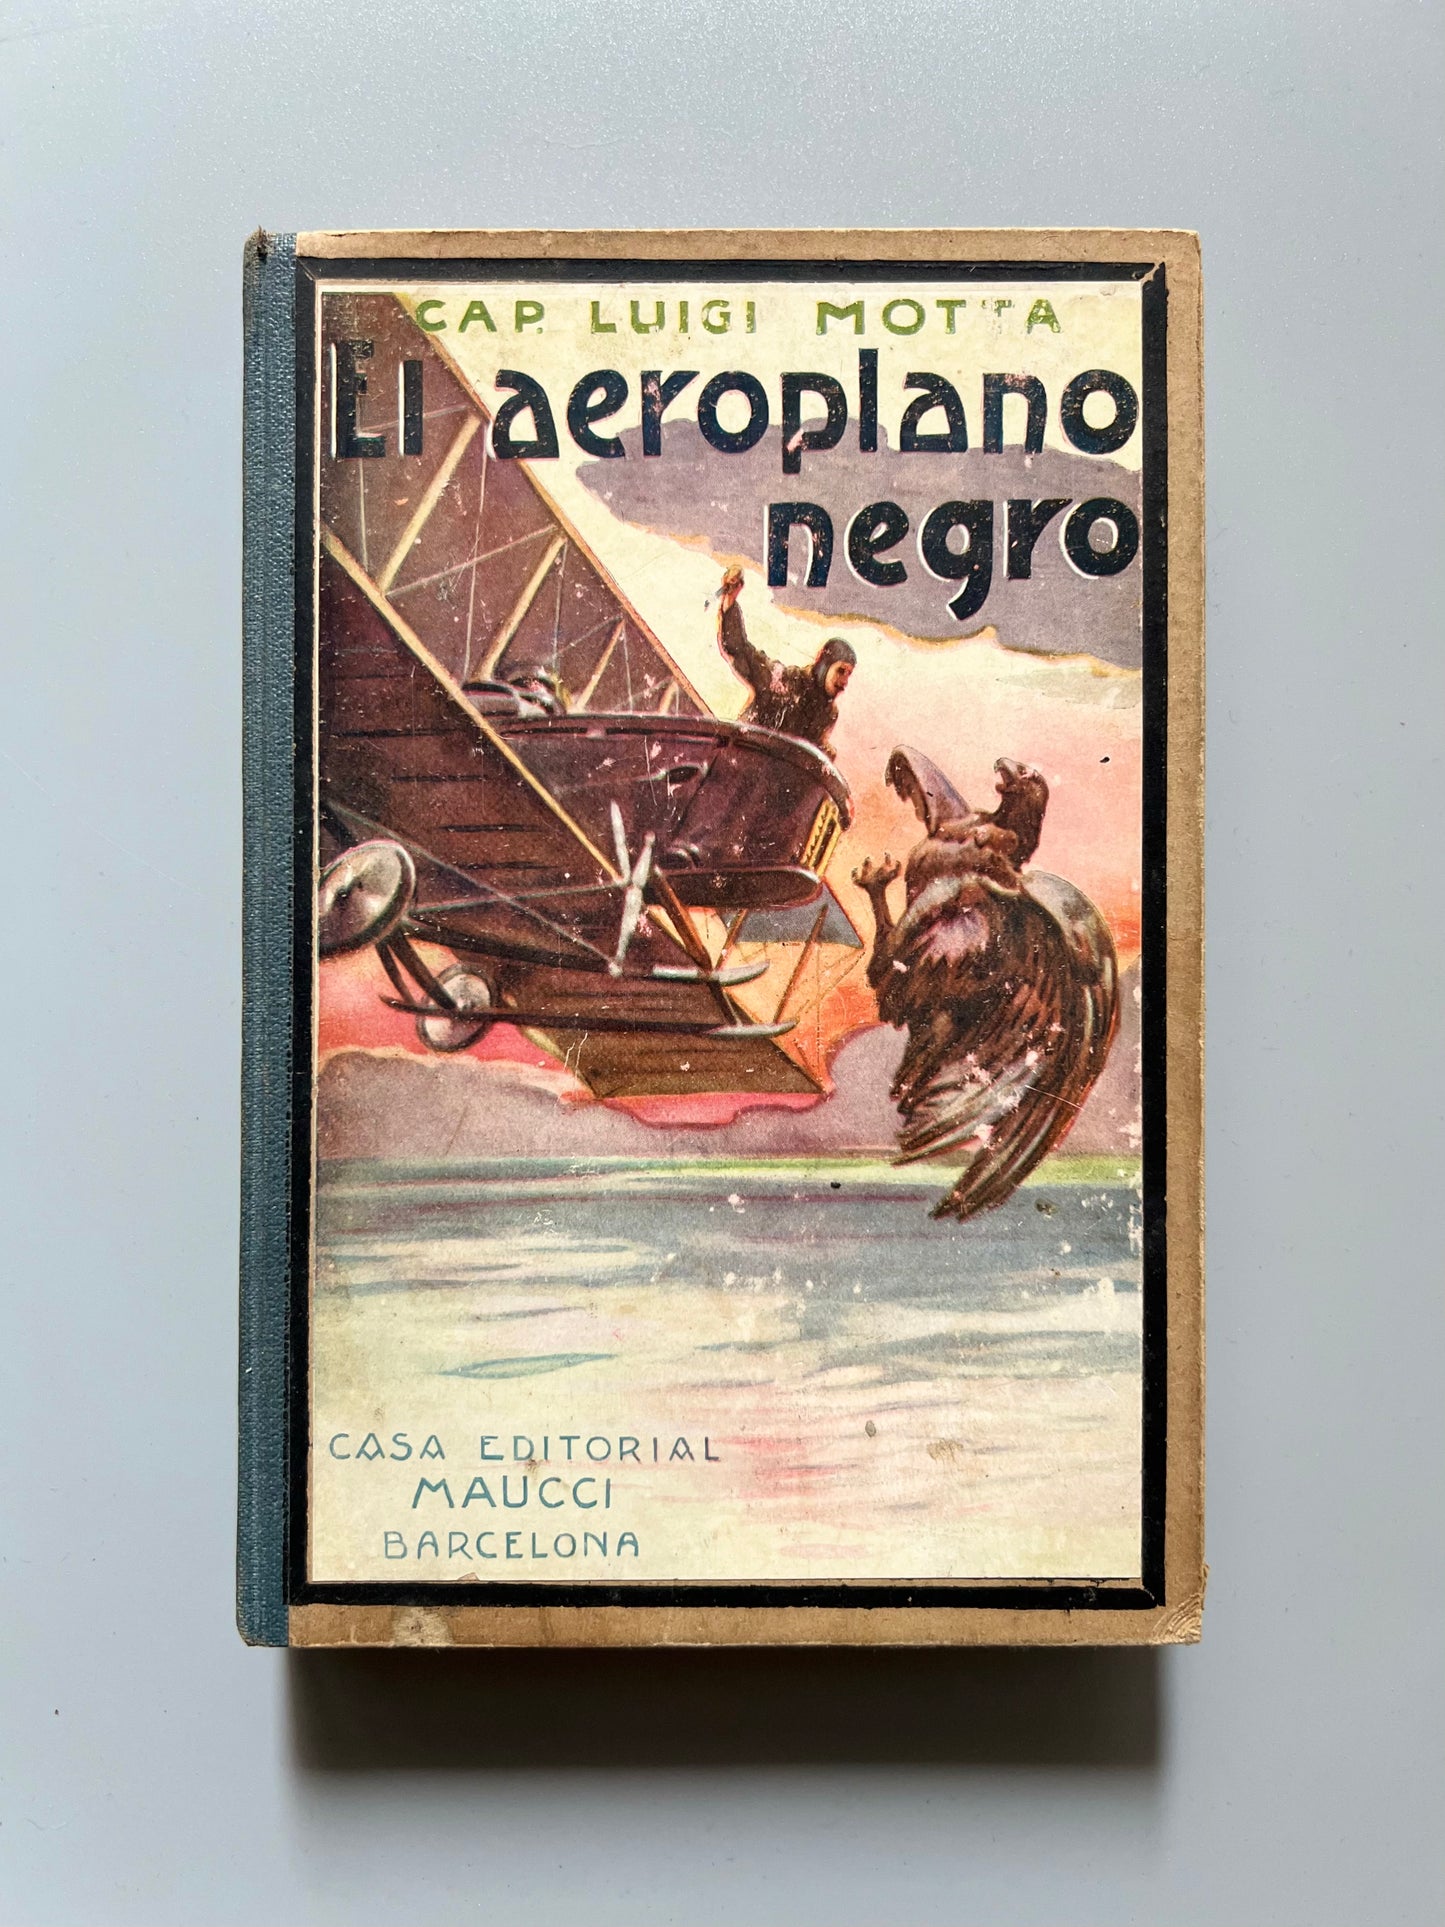 El aeroplano negro, cap. Luigi Motta - Casa editorial Maucci, ca. 1910